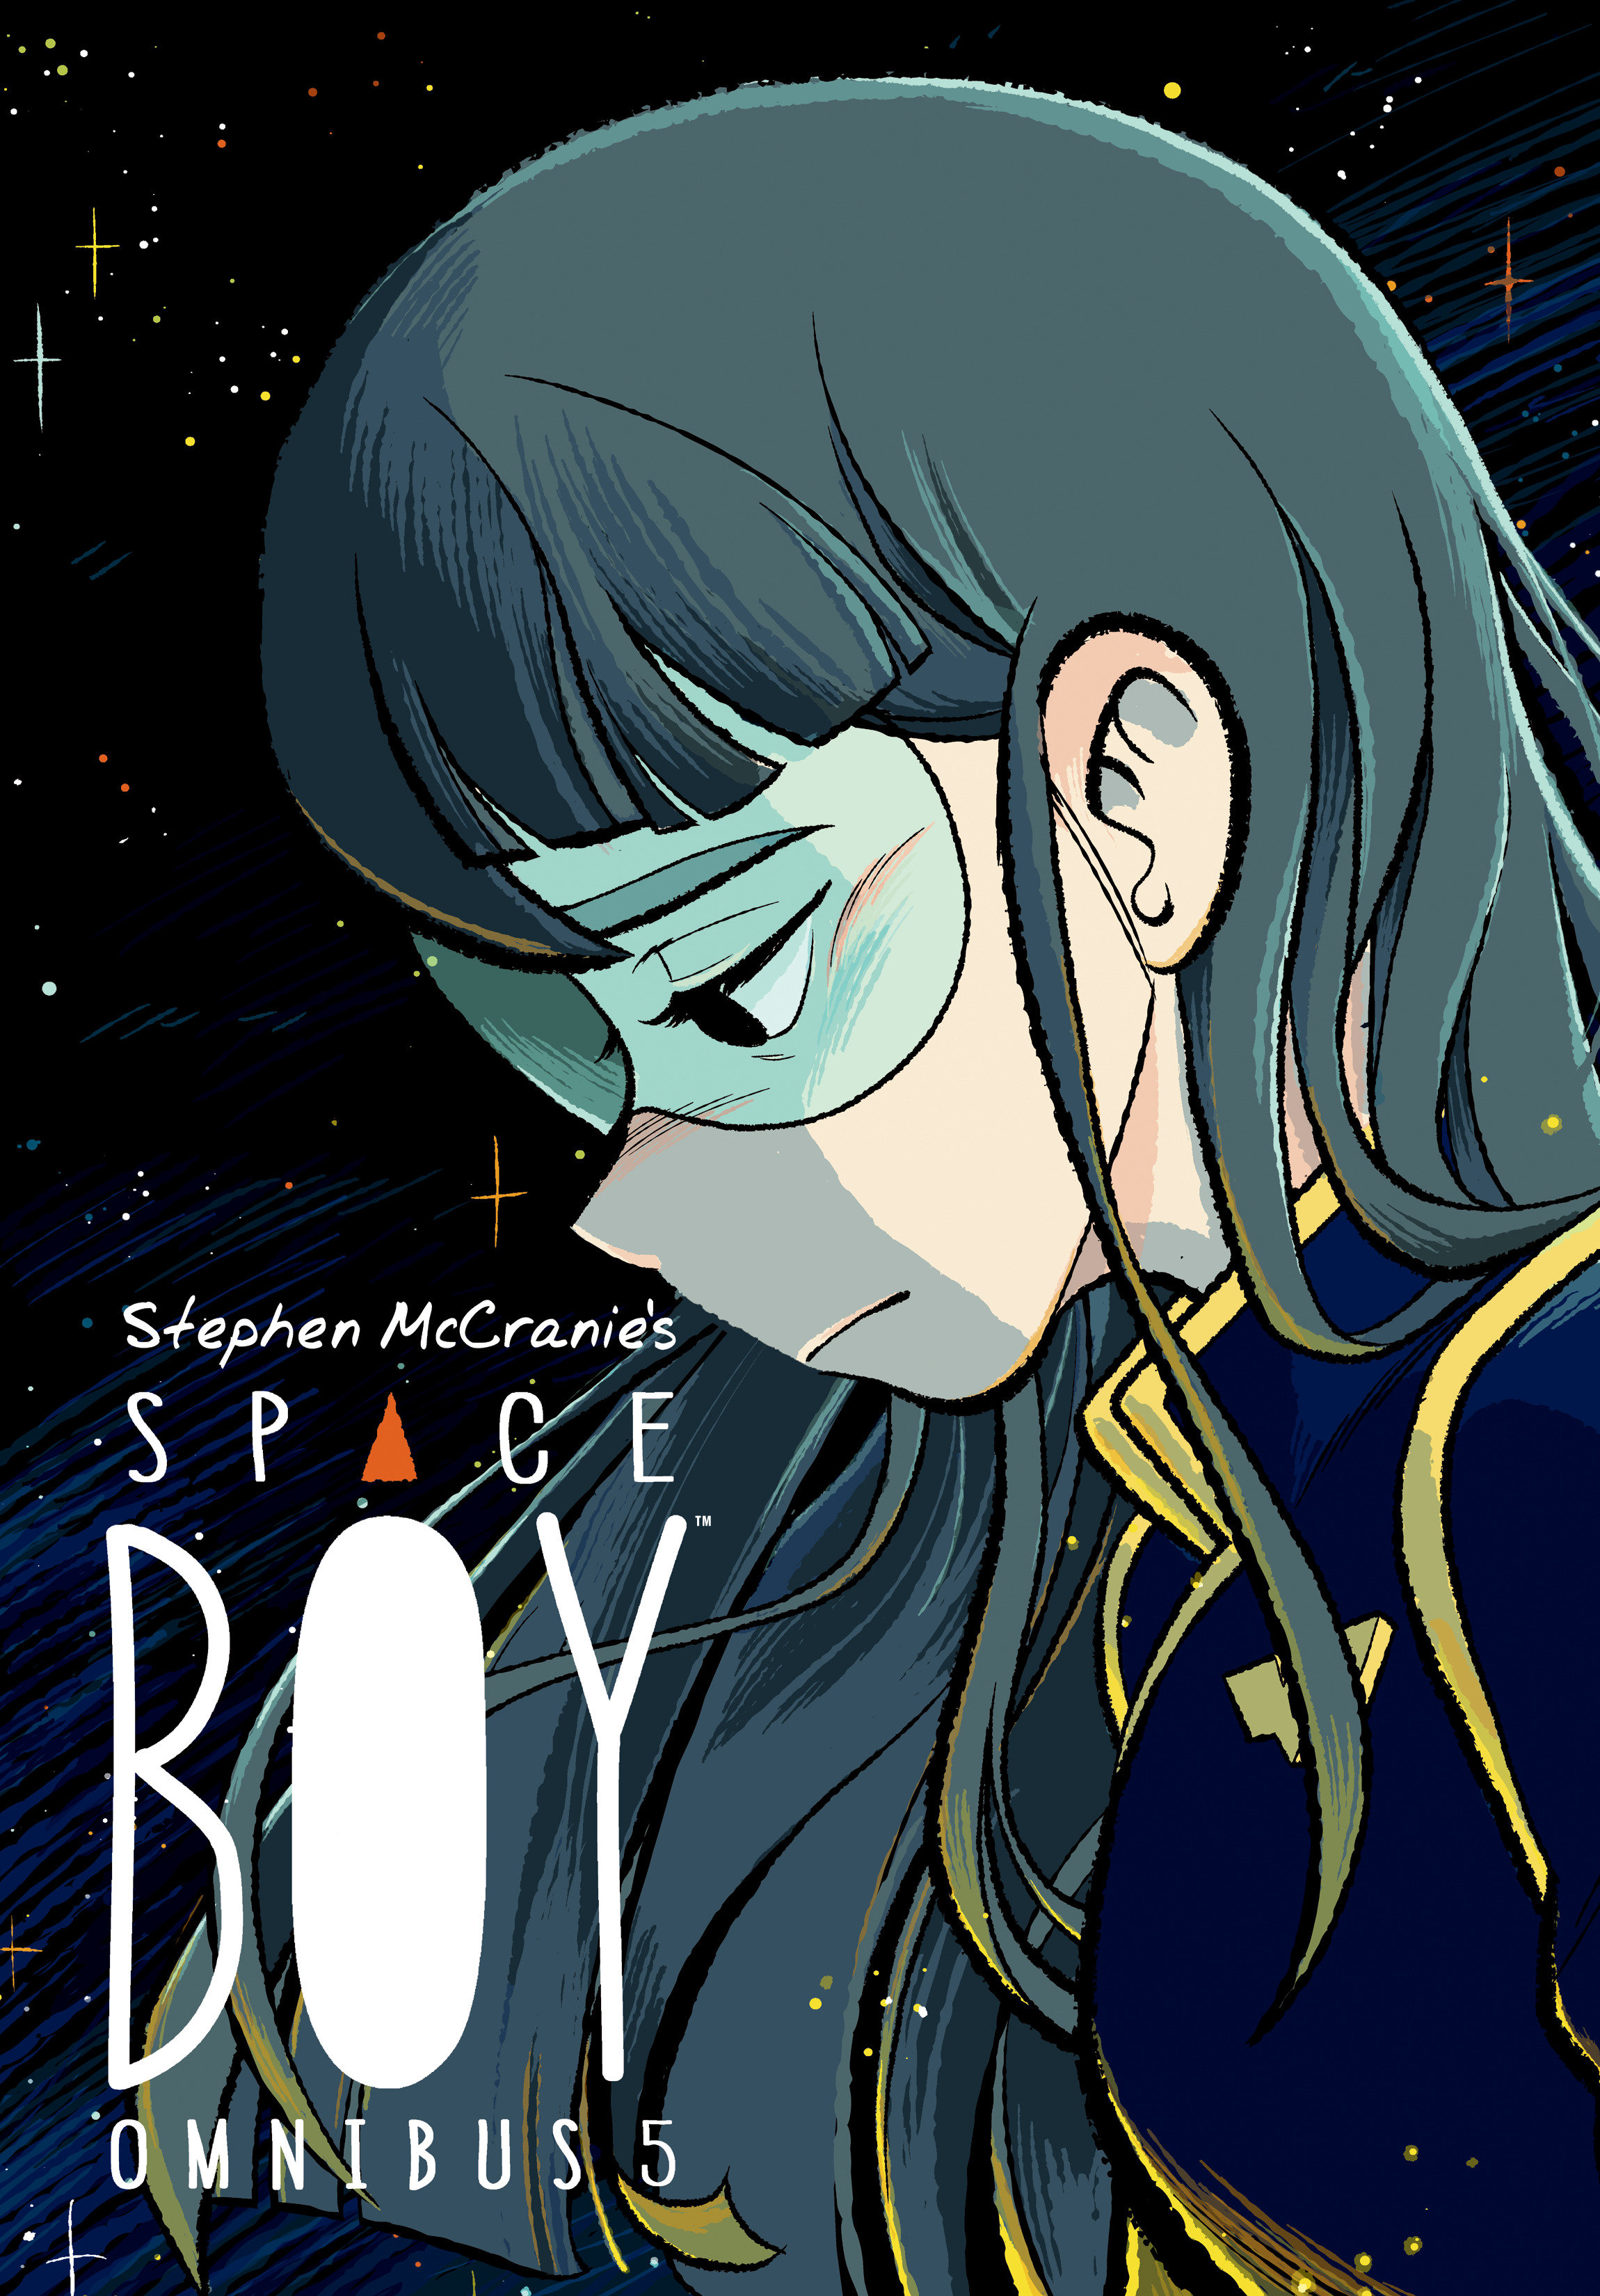 Stephen McCranie's Space Boy Omnibus Graphic Novel Volume 5